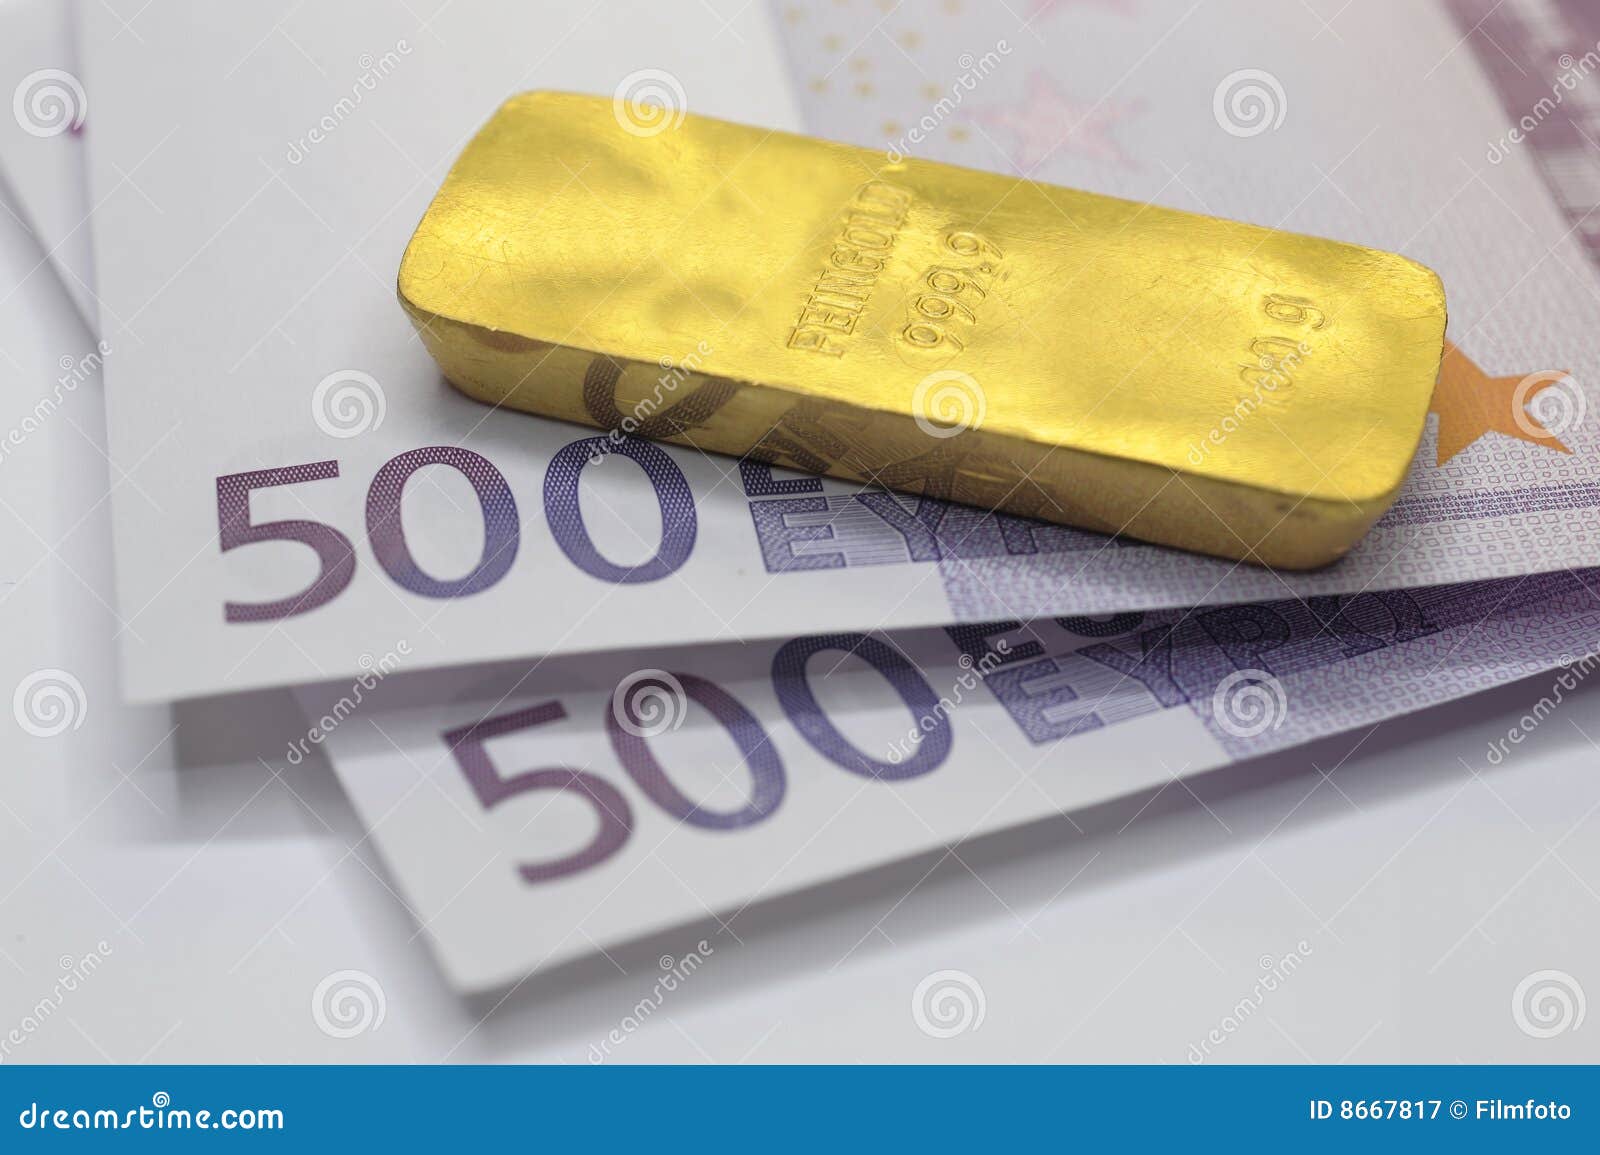 Concentratie Regelen Intimidatie Bar of gold and 1000 Euros stock image. Image of goldbars - 8667817